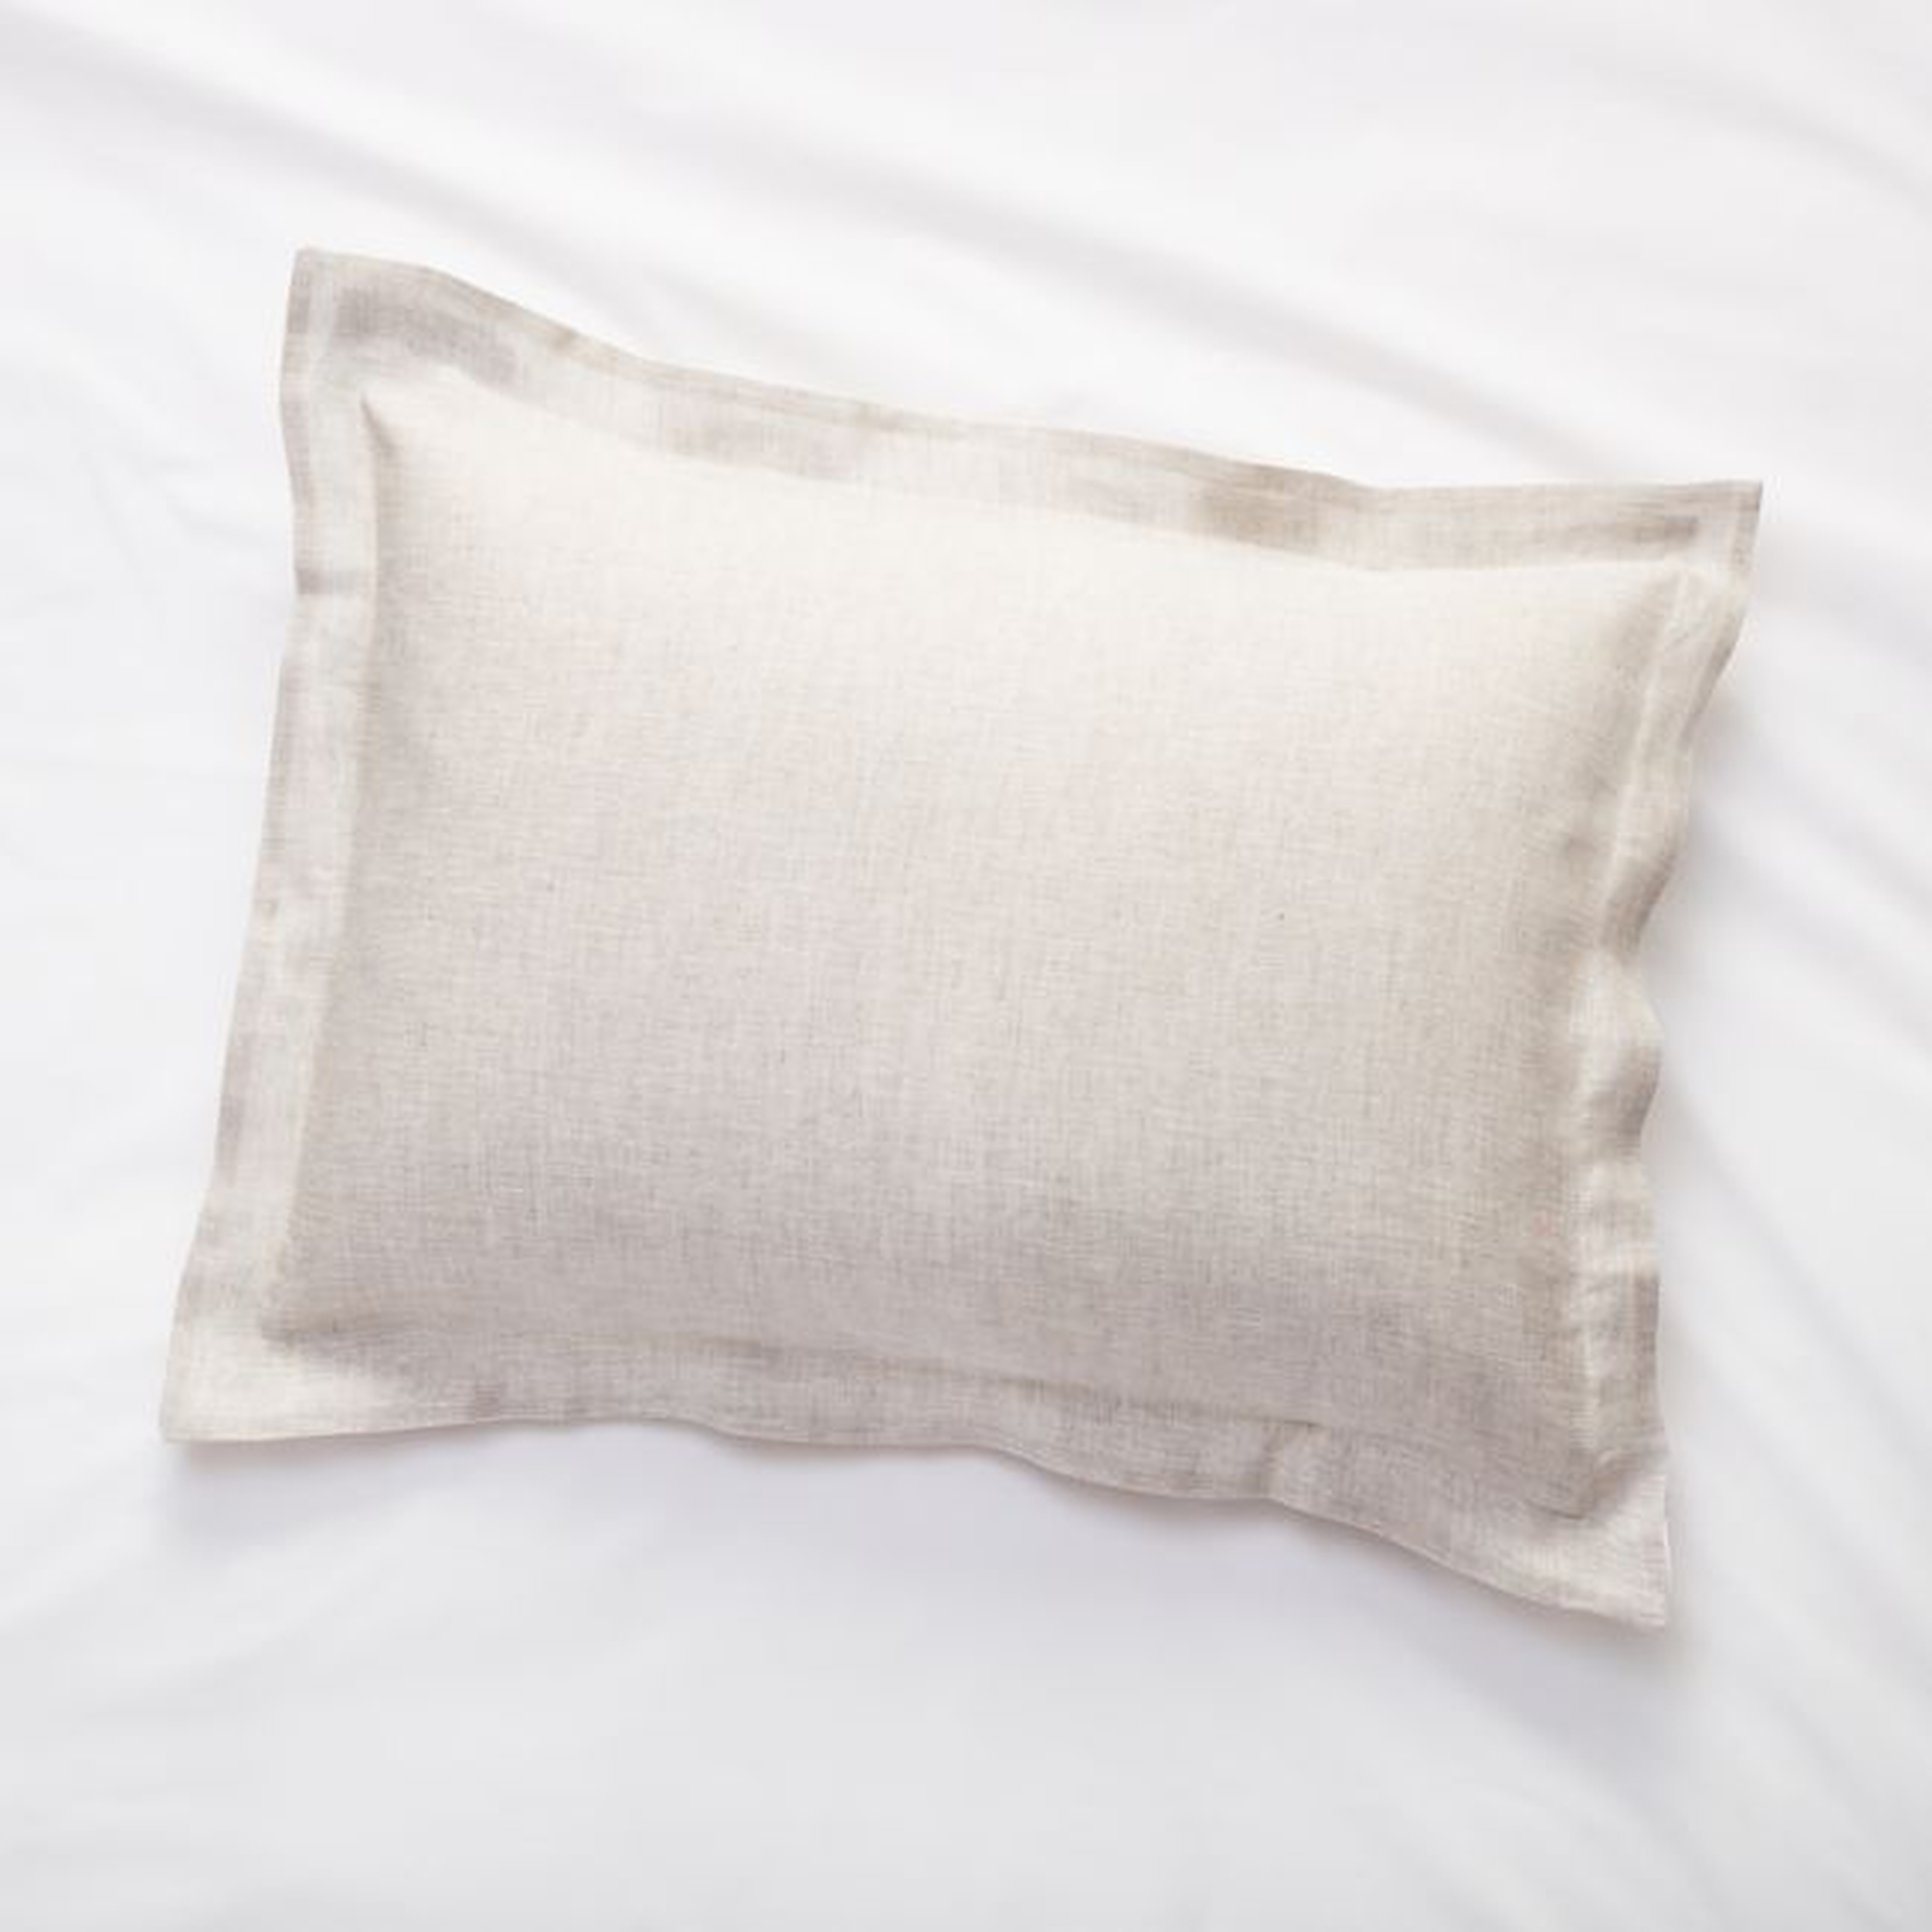 New Natural Hemp Standard Bed Pillow Sham - Crate and Barrel